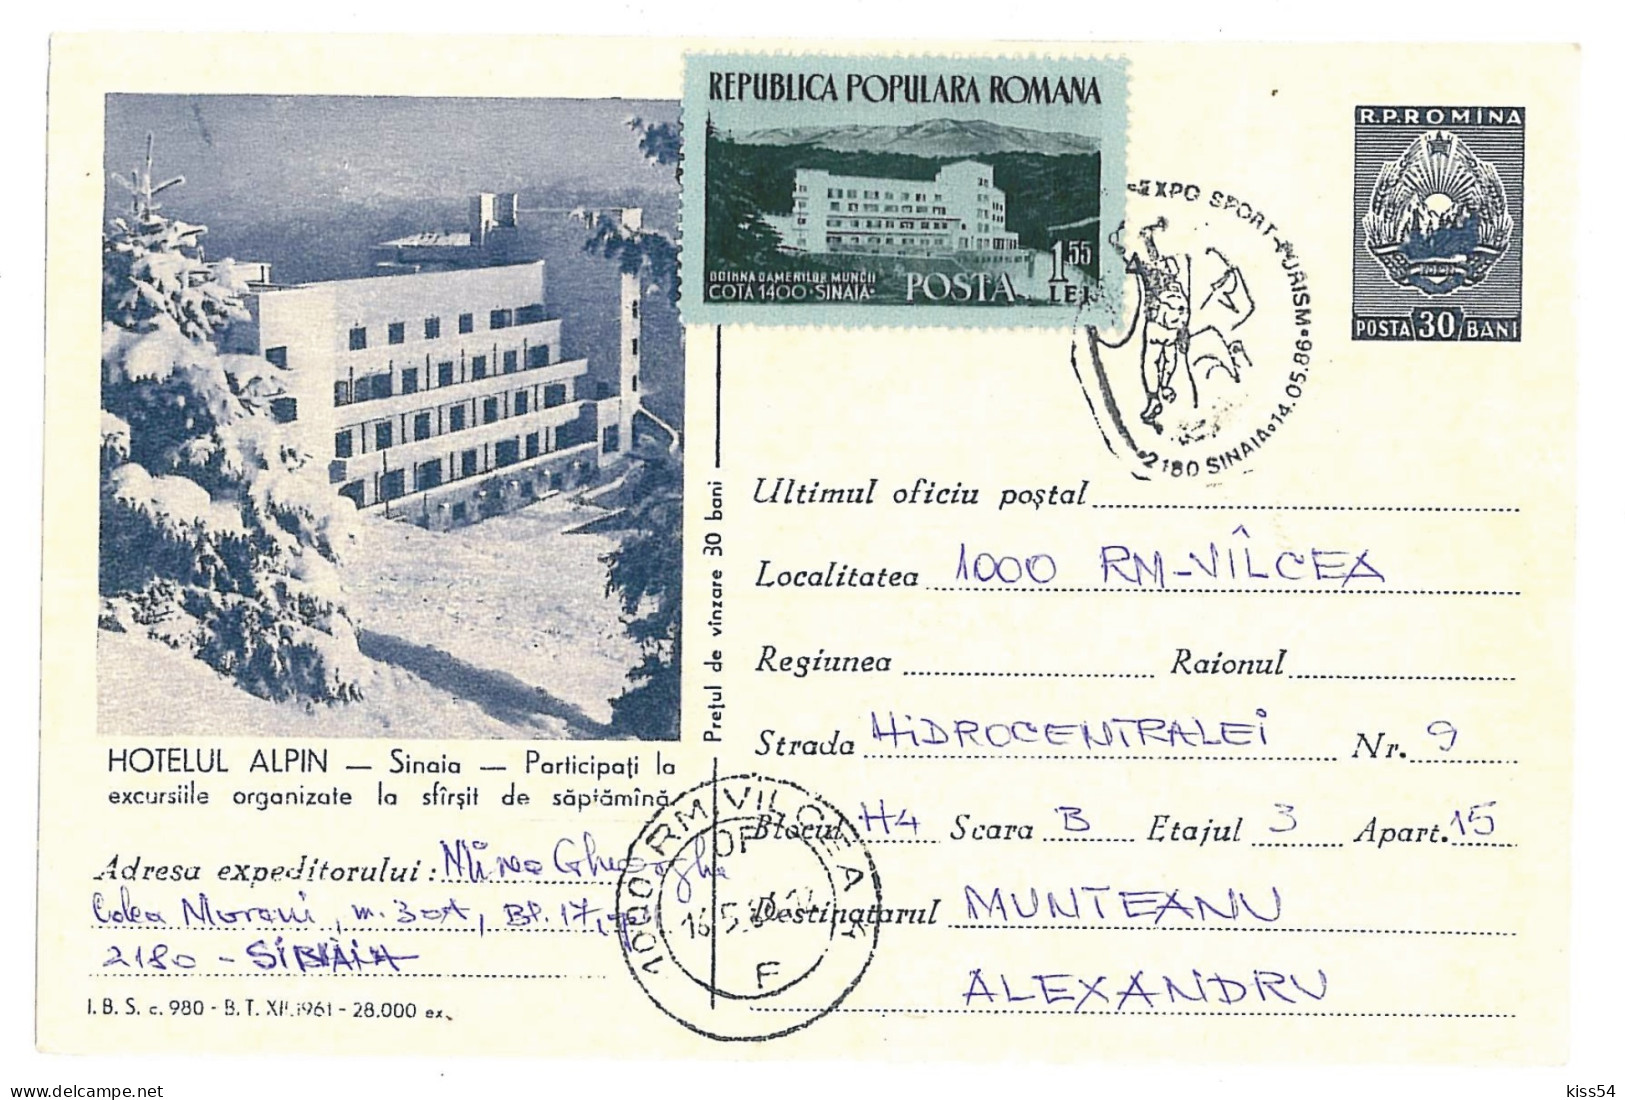 IP 61 - 0980d SINAIA, Hotel Alpin, Romania - Stationery - Used - 1961 - Ganzsachen